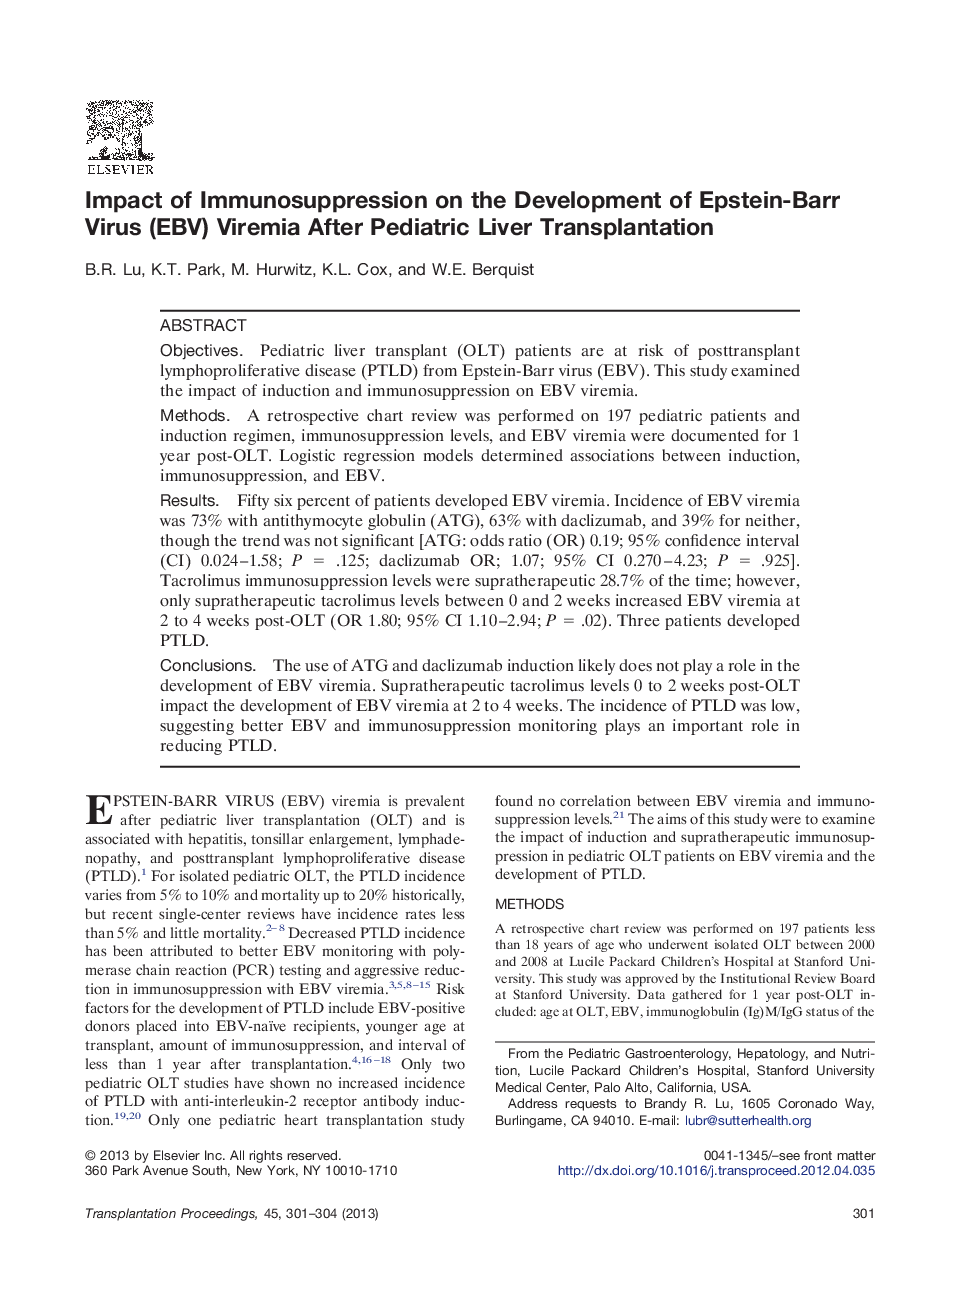 Impact of Immunosuppression on the Development of Epstein-Barr Virus (EBV) Viremia After Pediatric Liver Transplantation